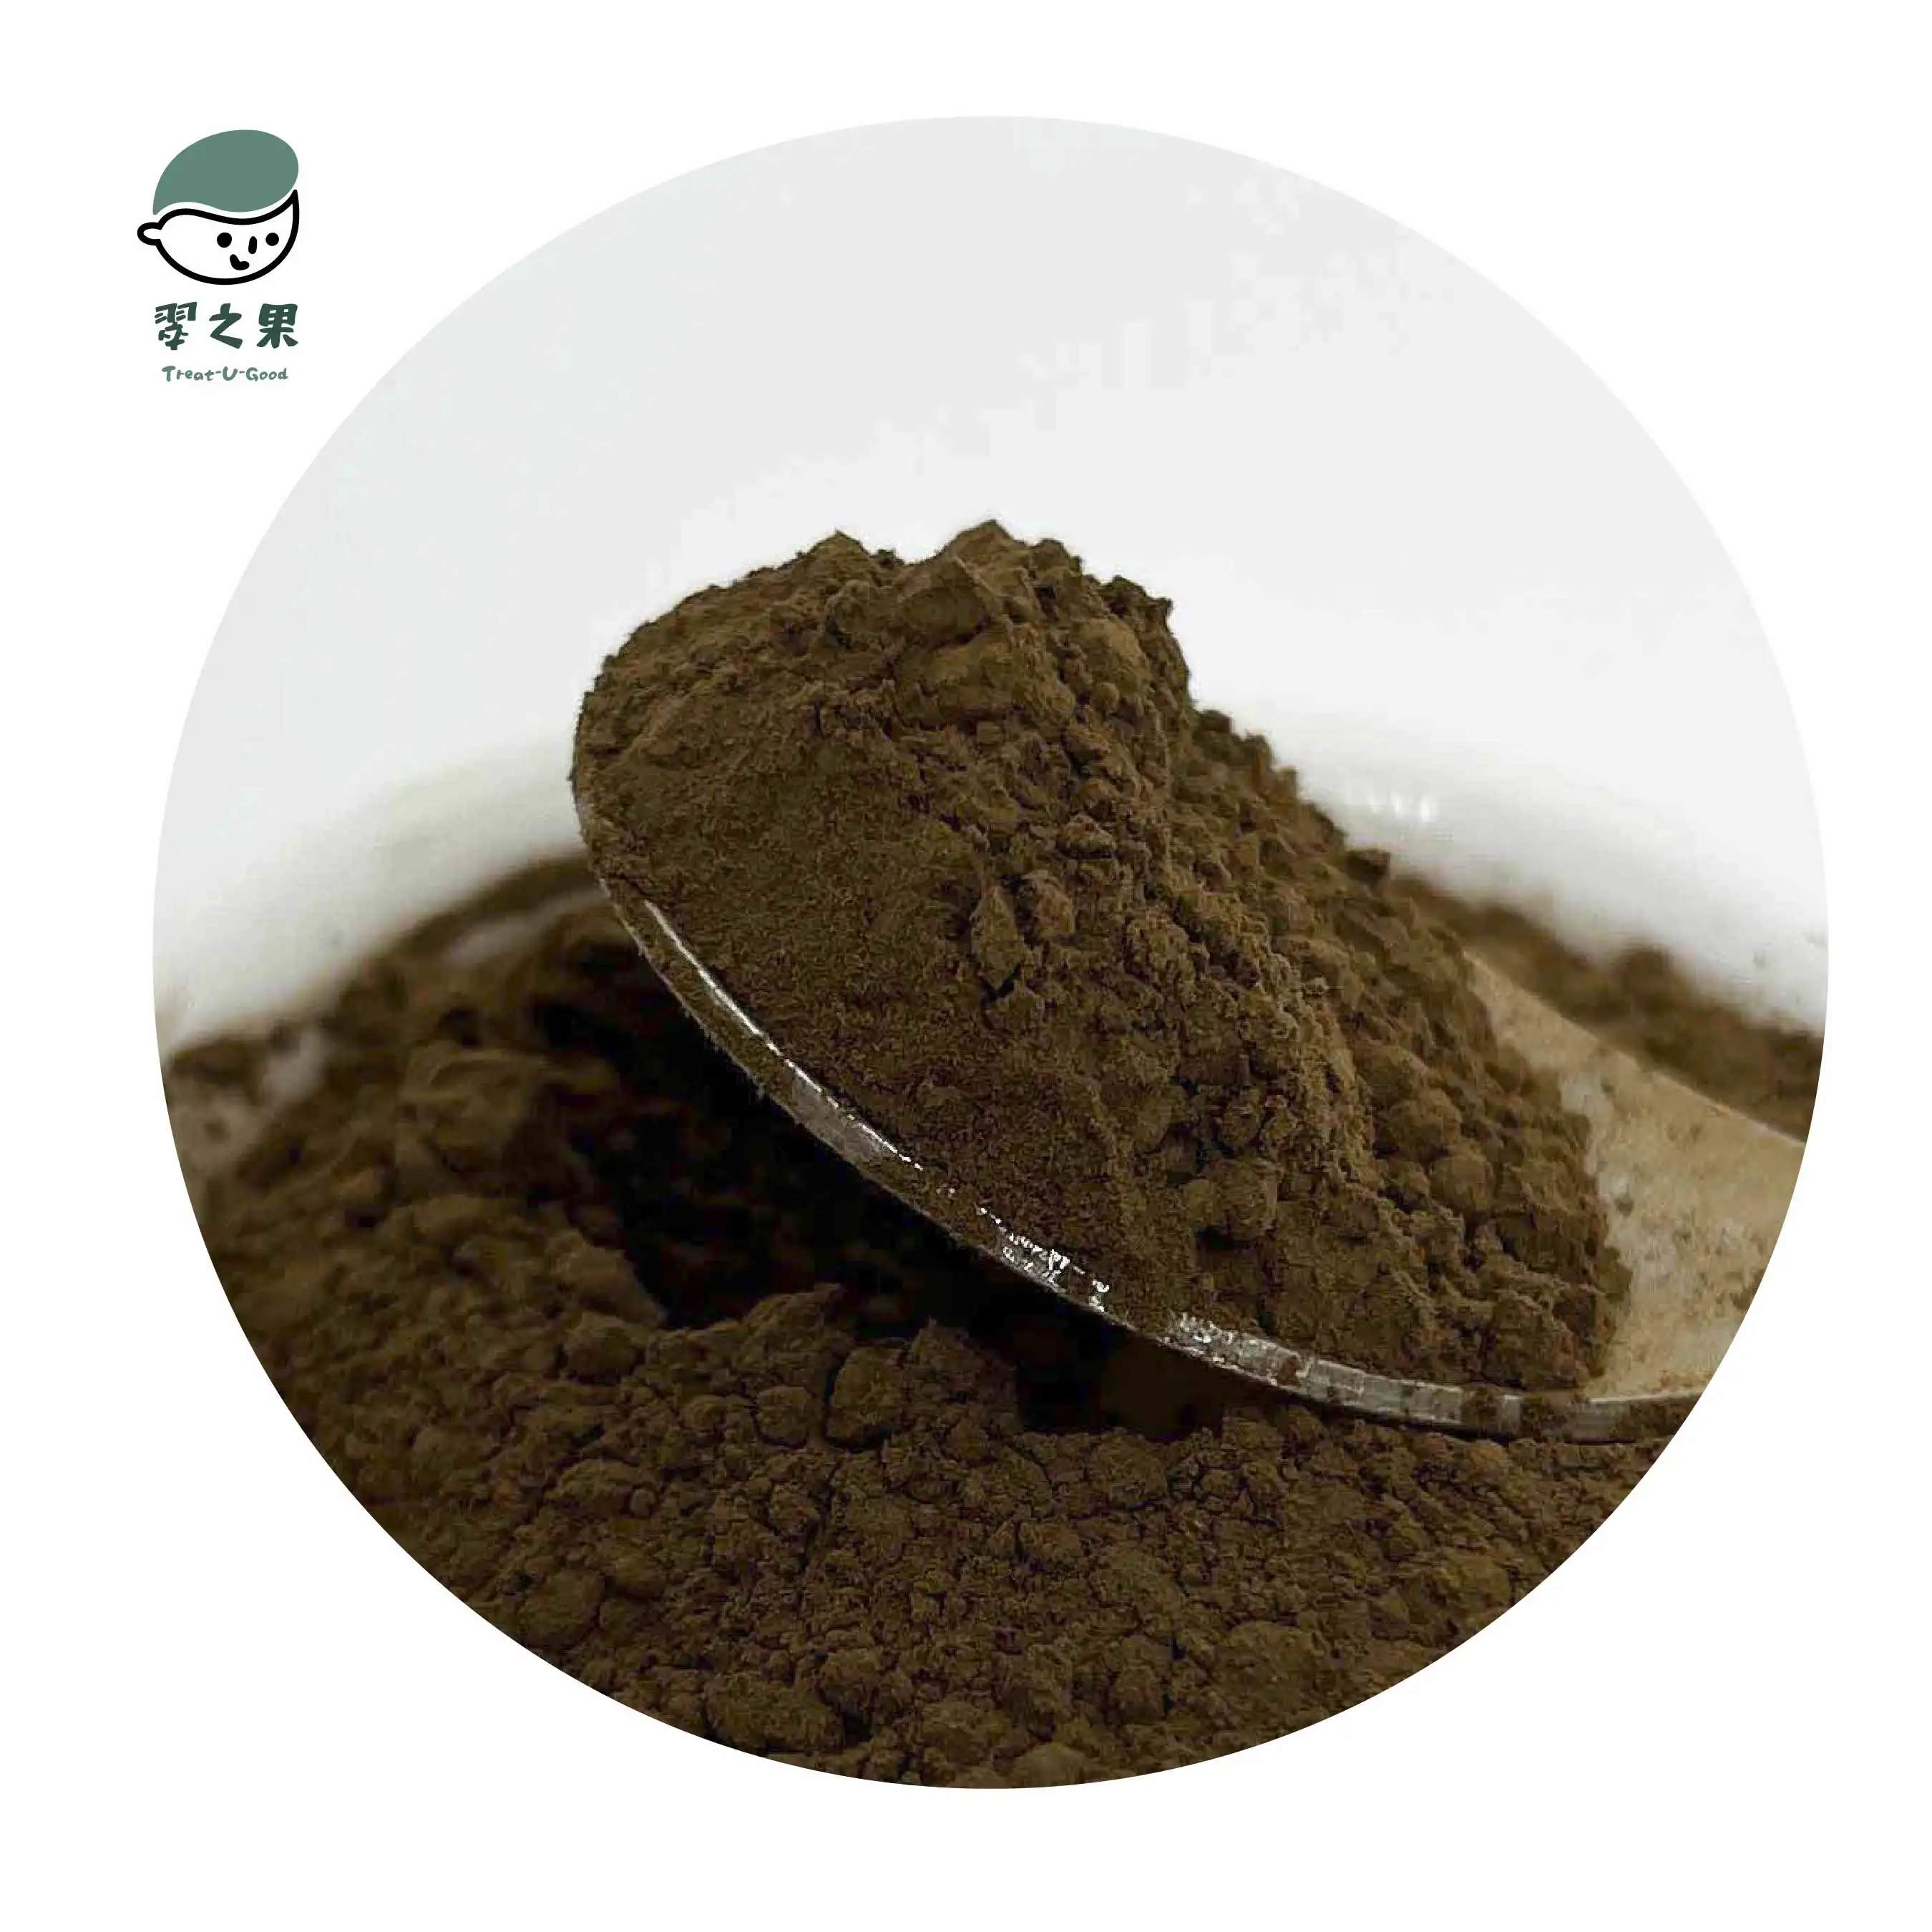 1kg Taiwan High Quality Tieguanyin Tea Powder